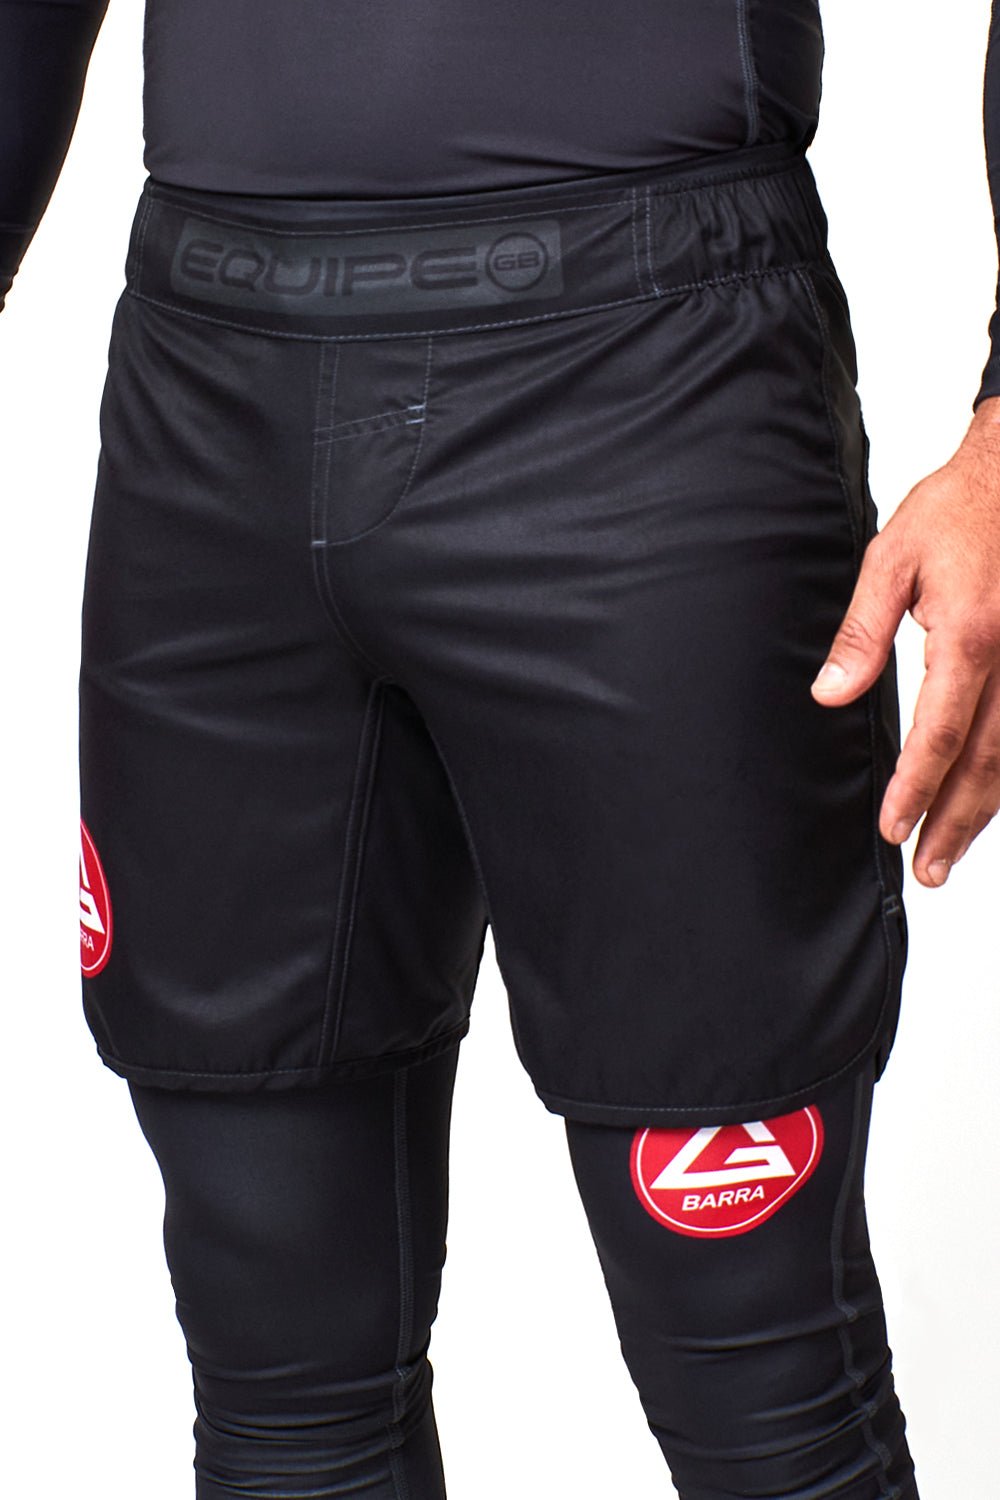 GB Edition Mens Compression Pants - Black